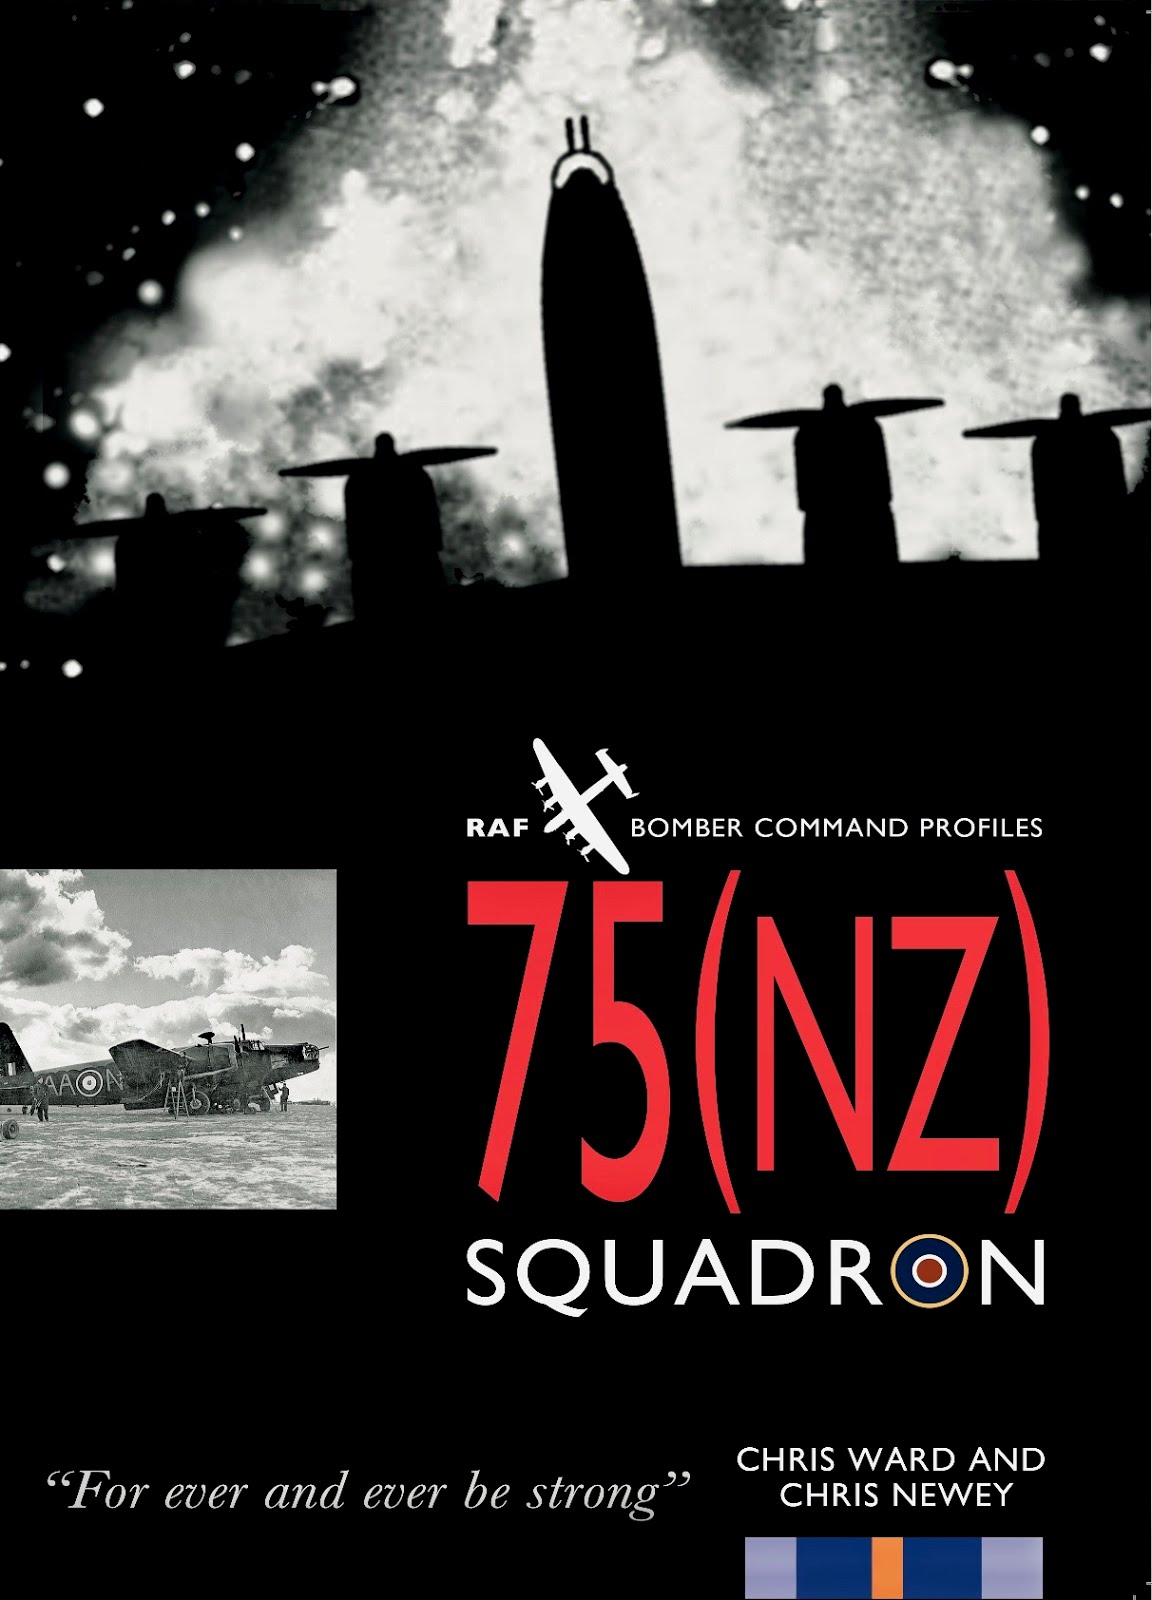 75 (NZ) Squadron